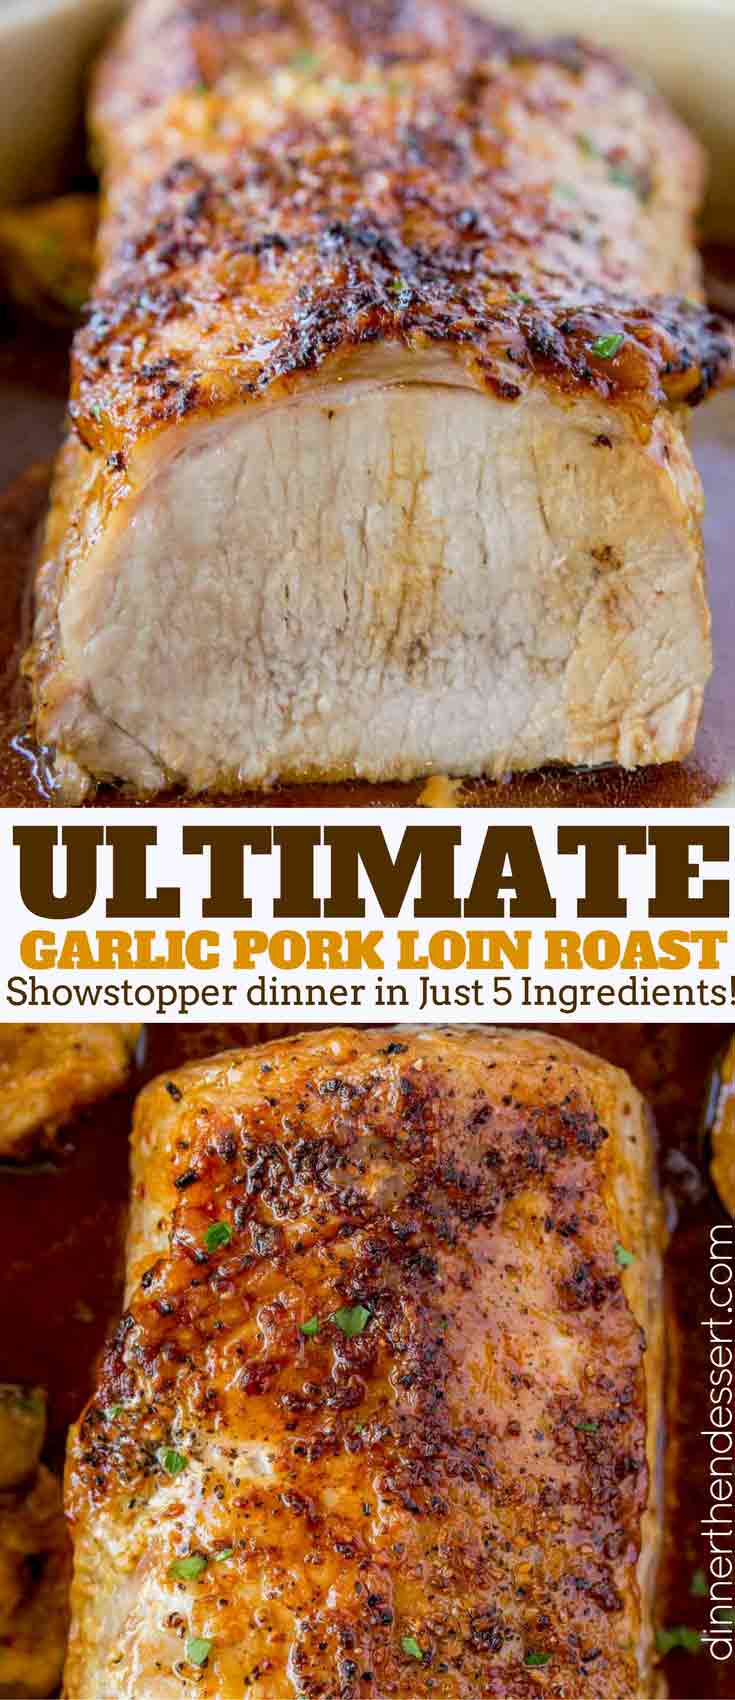 Ultimate Garlic Pork Loin Roast Dinner Then Dessert,Sobieski Vodka Price